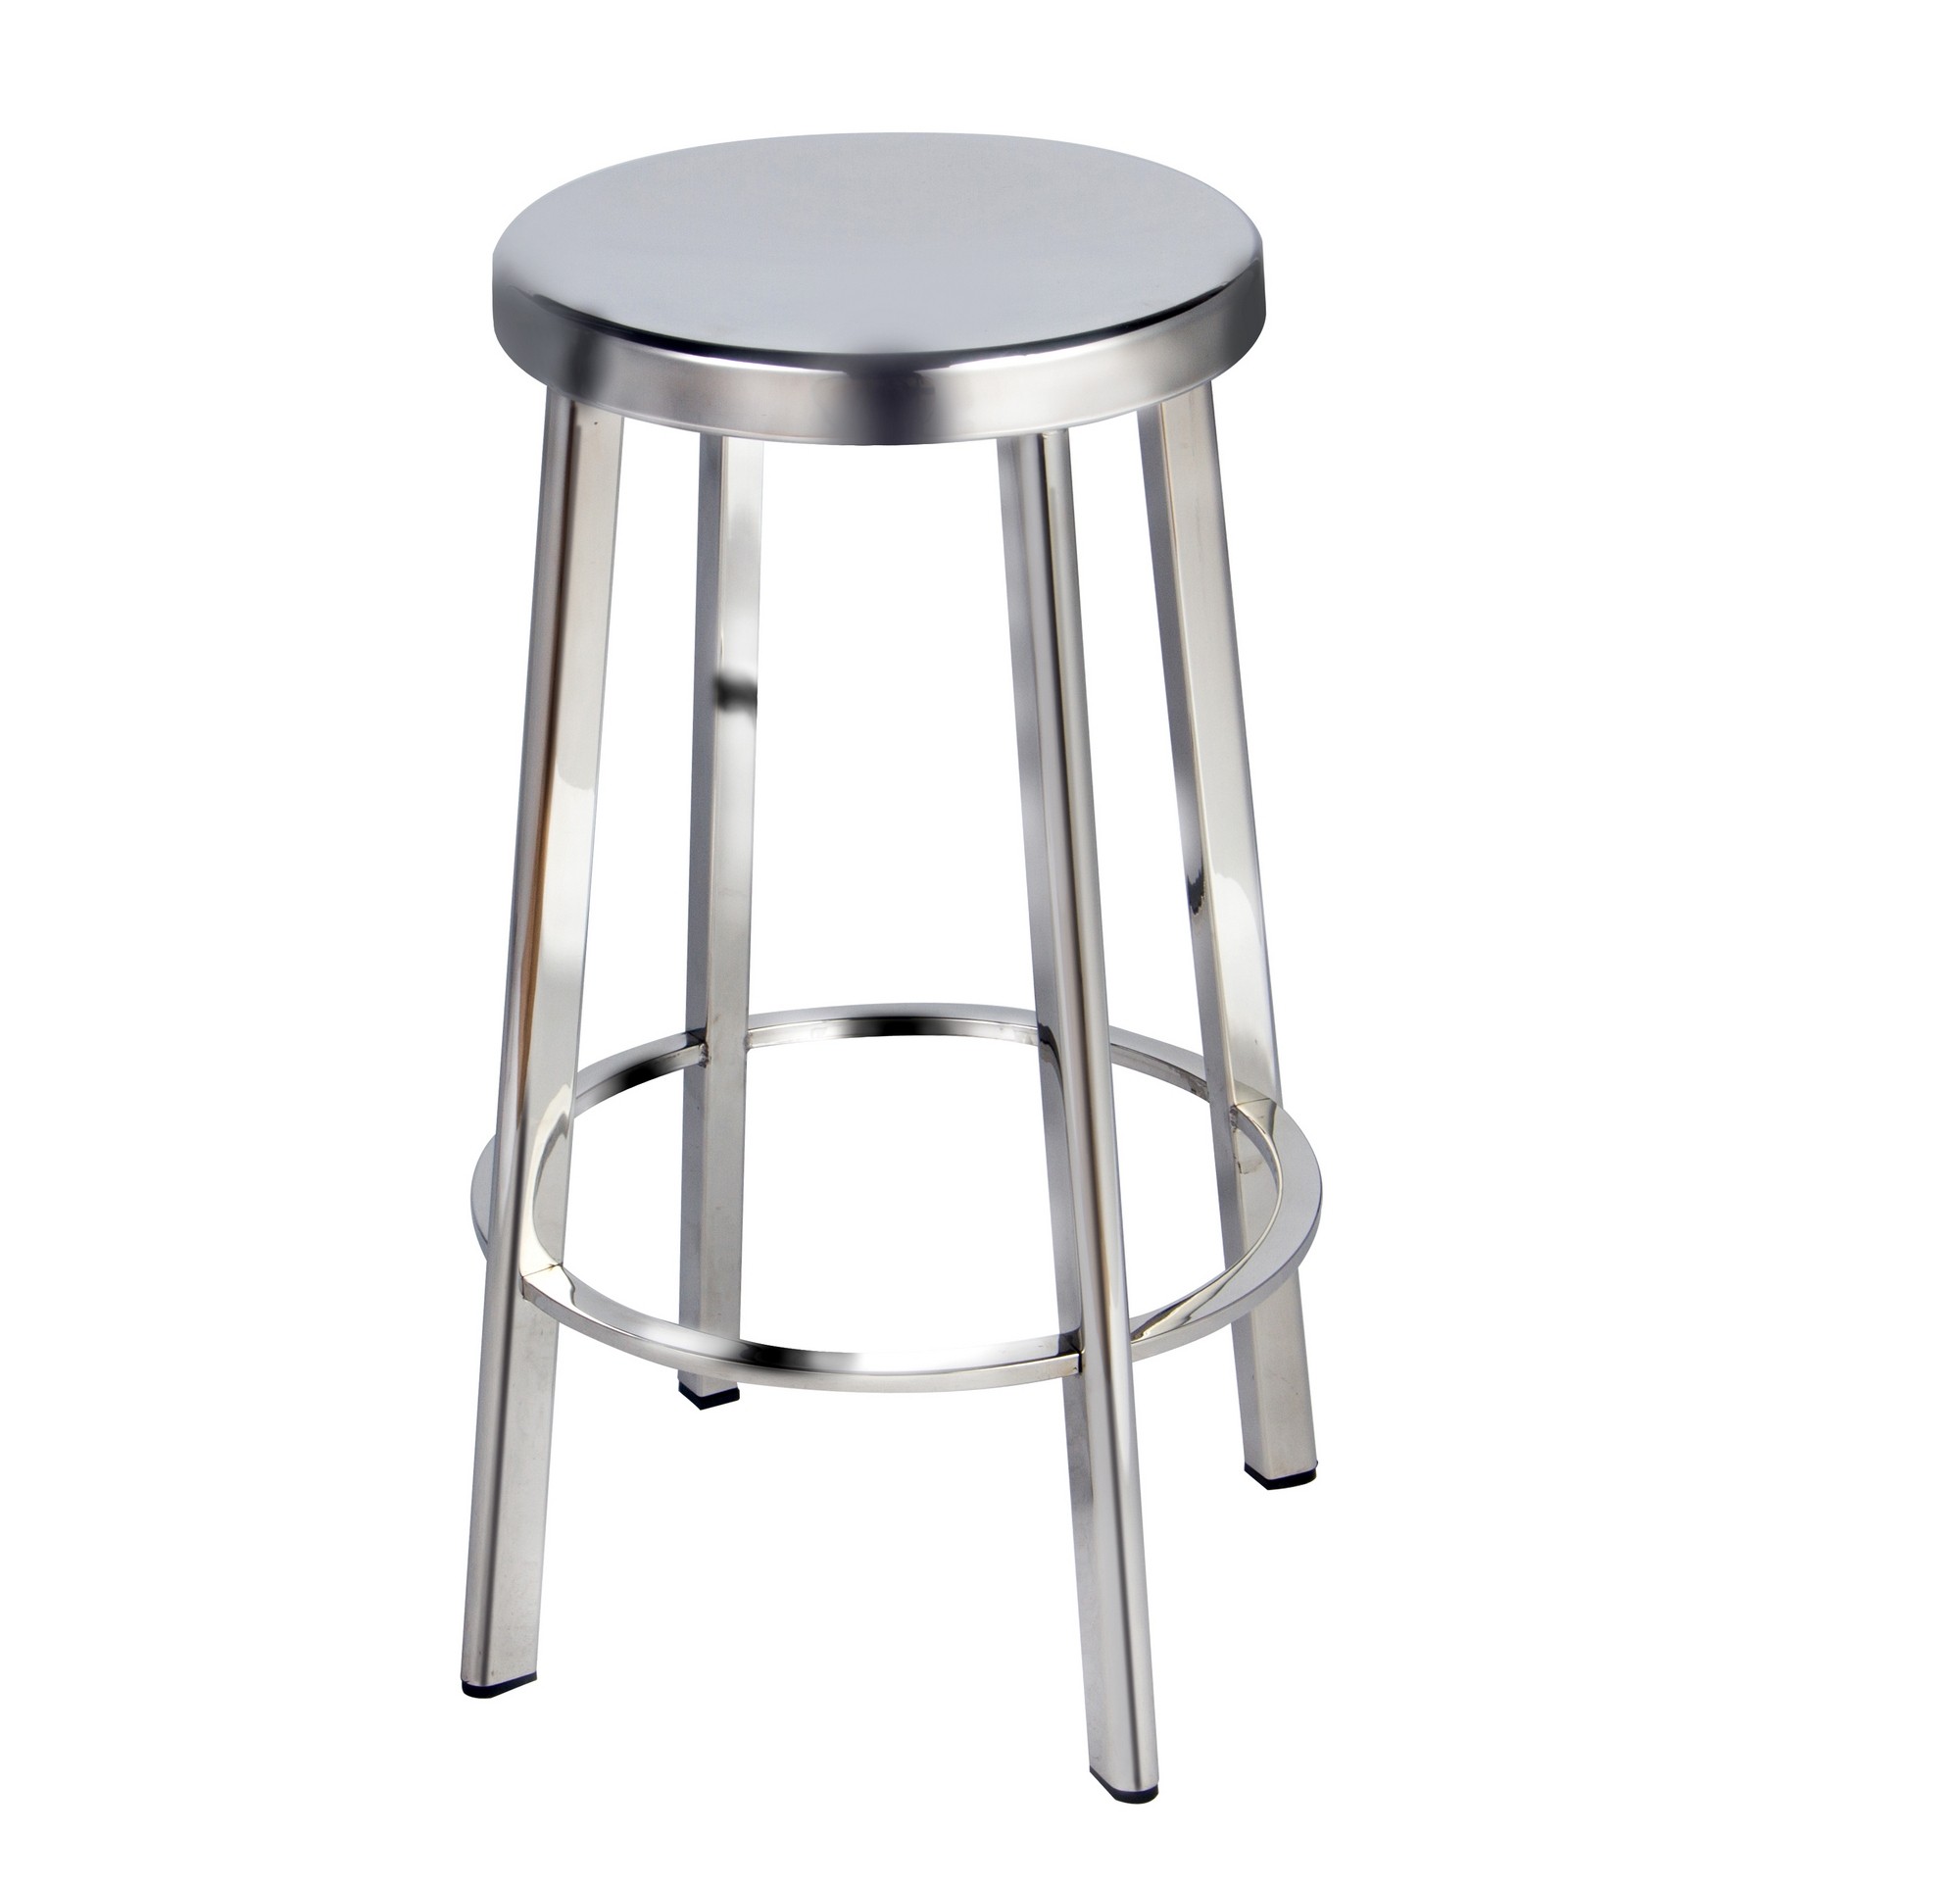 Vitter stainless bar stool set of two